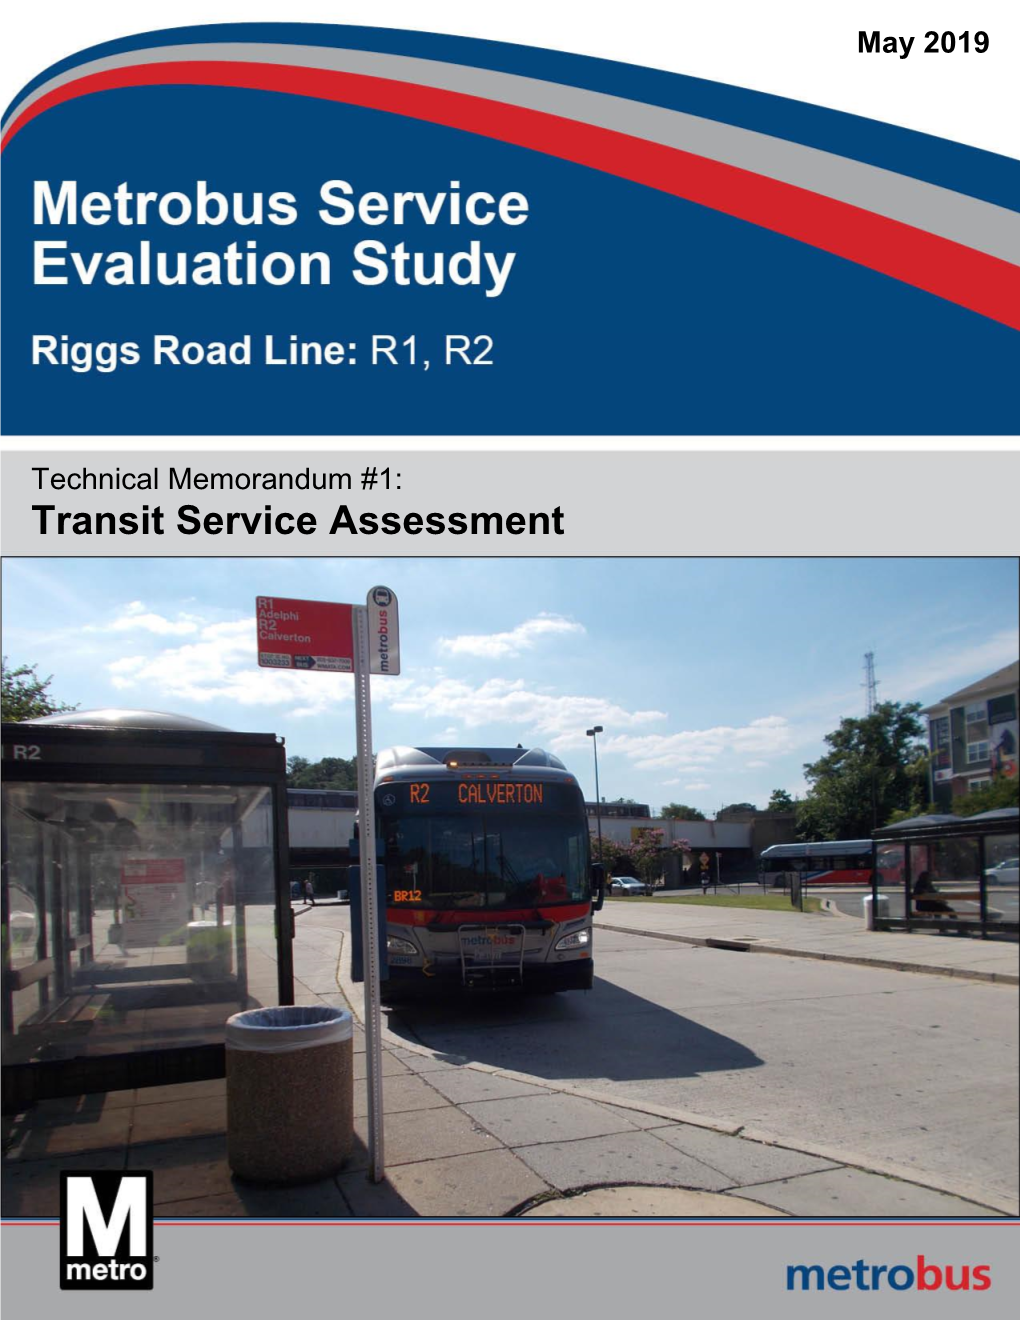 Technical Memorandum #1: Transit Service Assessment